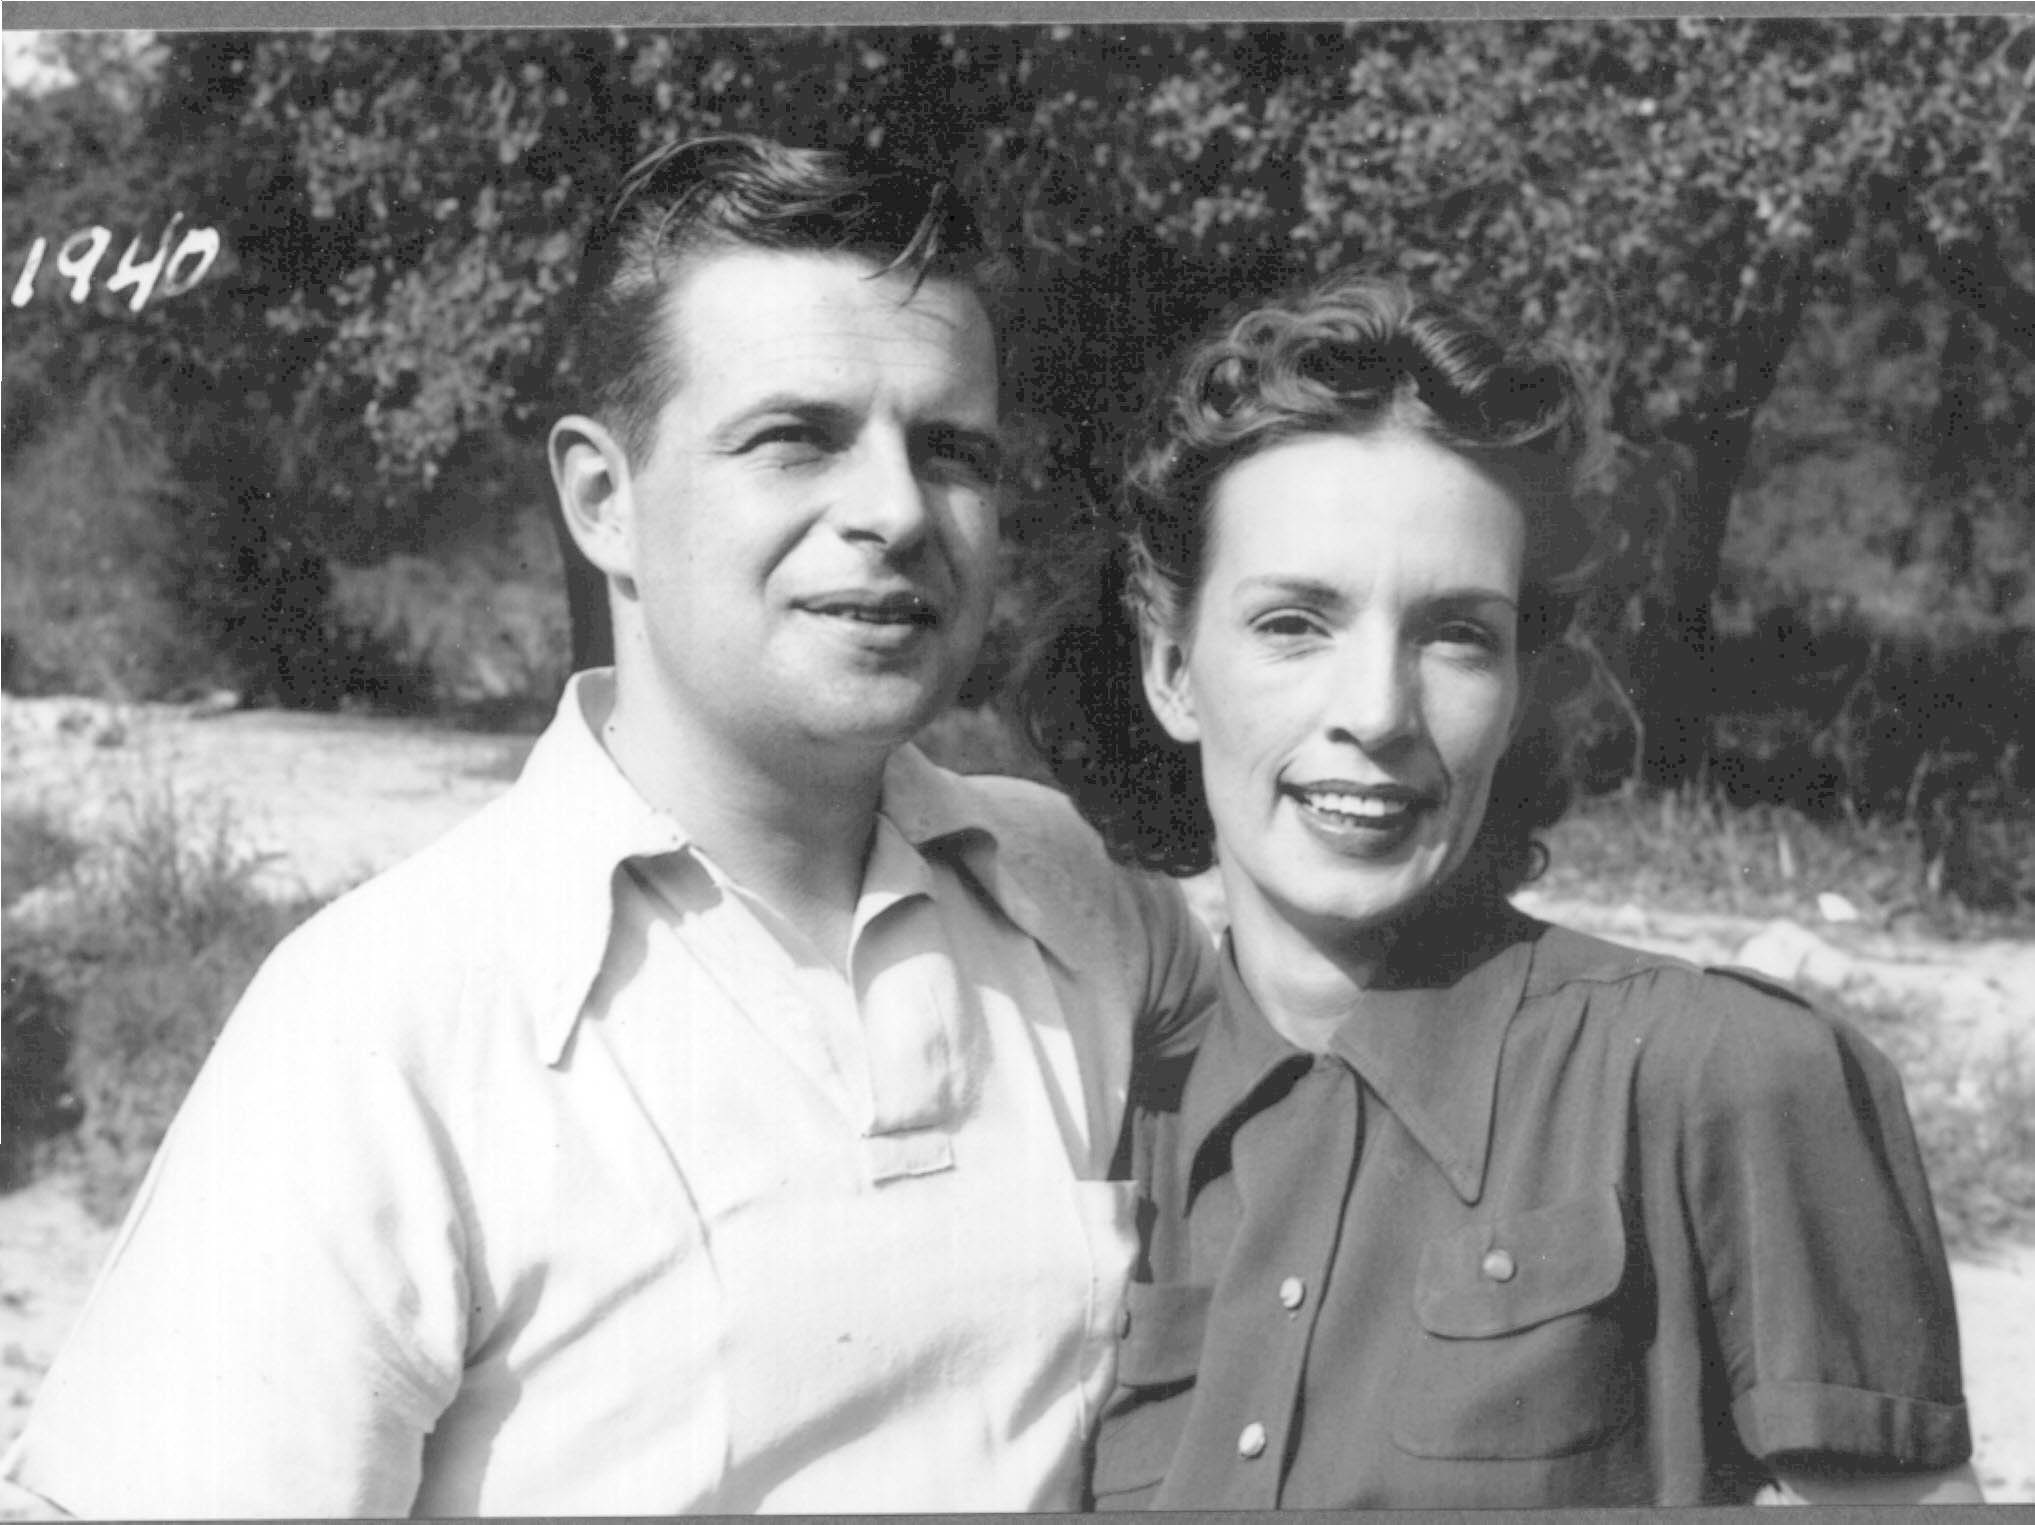 Glenn Eugene Murphy and wife, Ila May Draper Murphy, in 1940